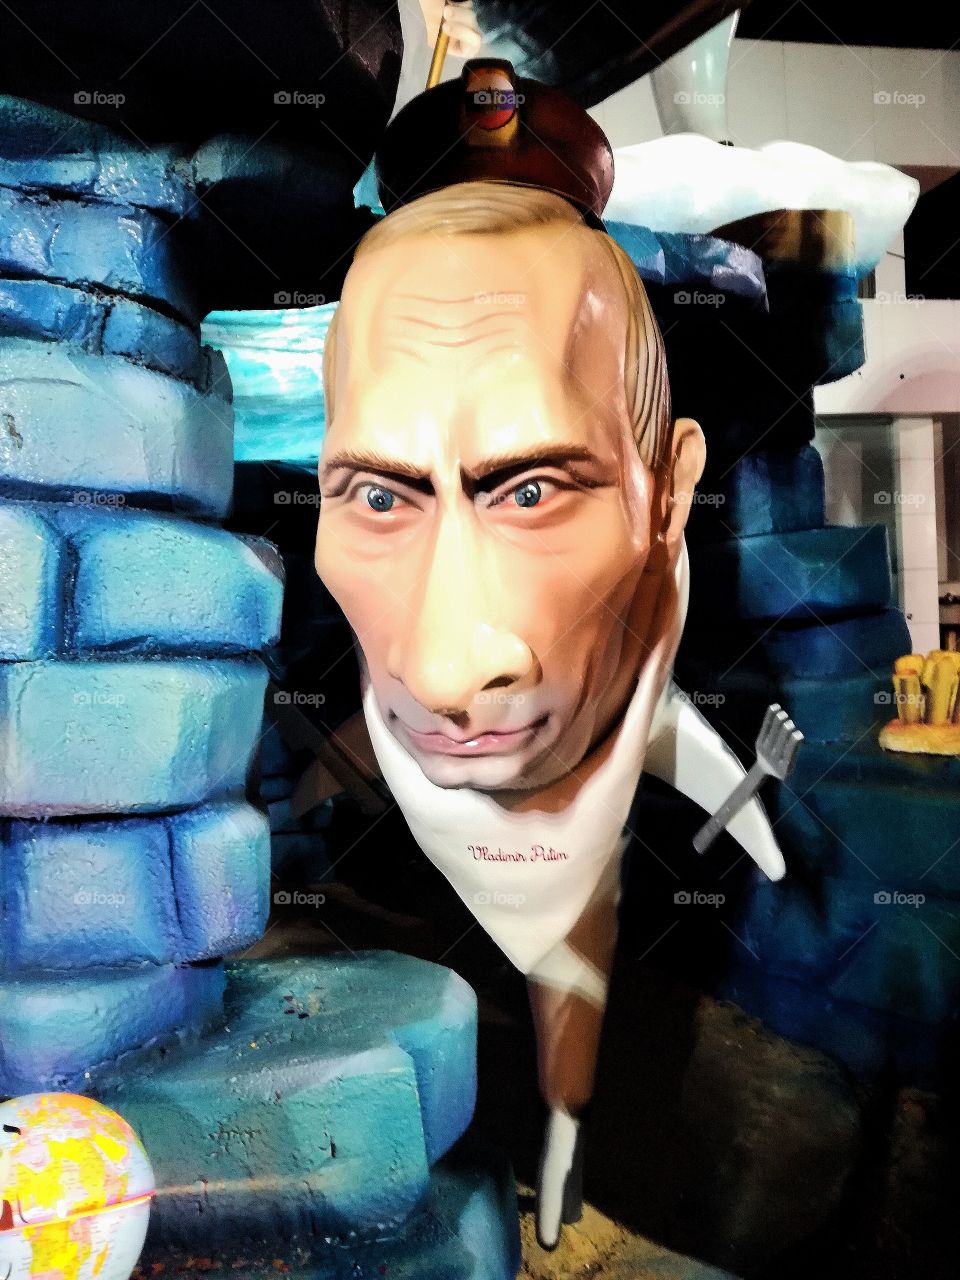 #vladimir Putin #smile #drawing #design #entertainment #politics